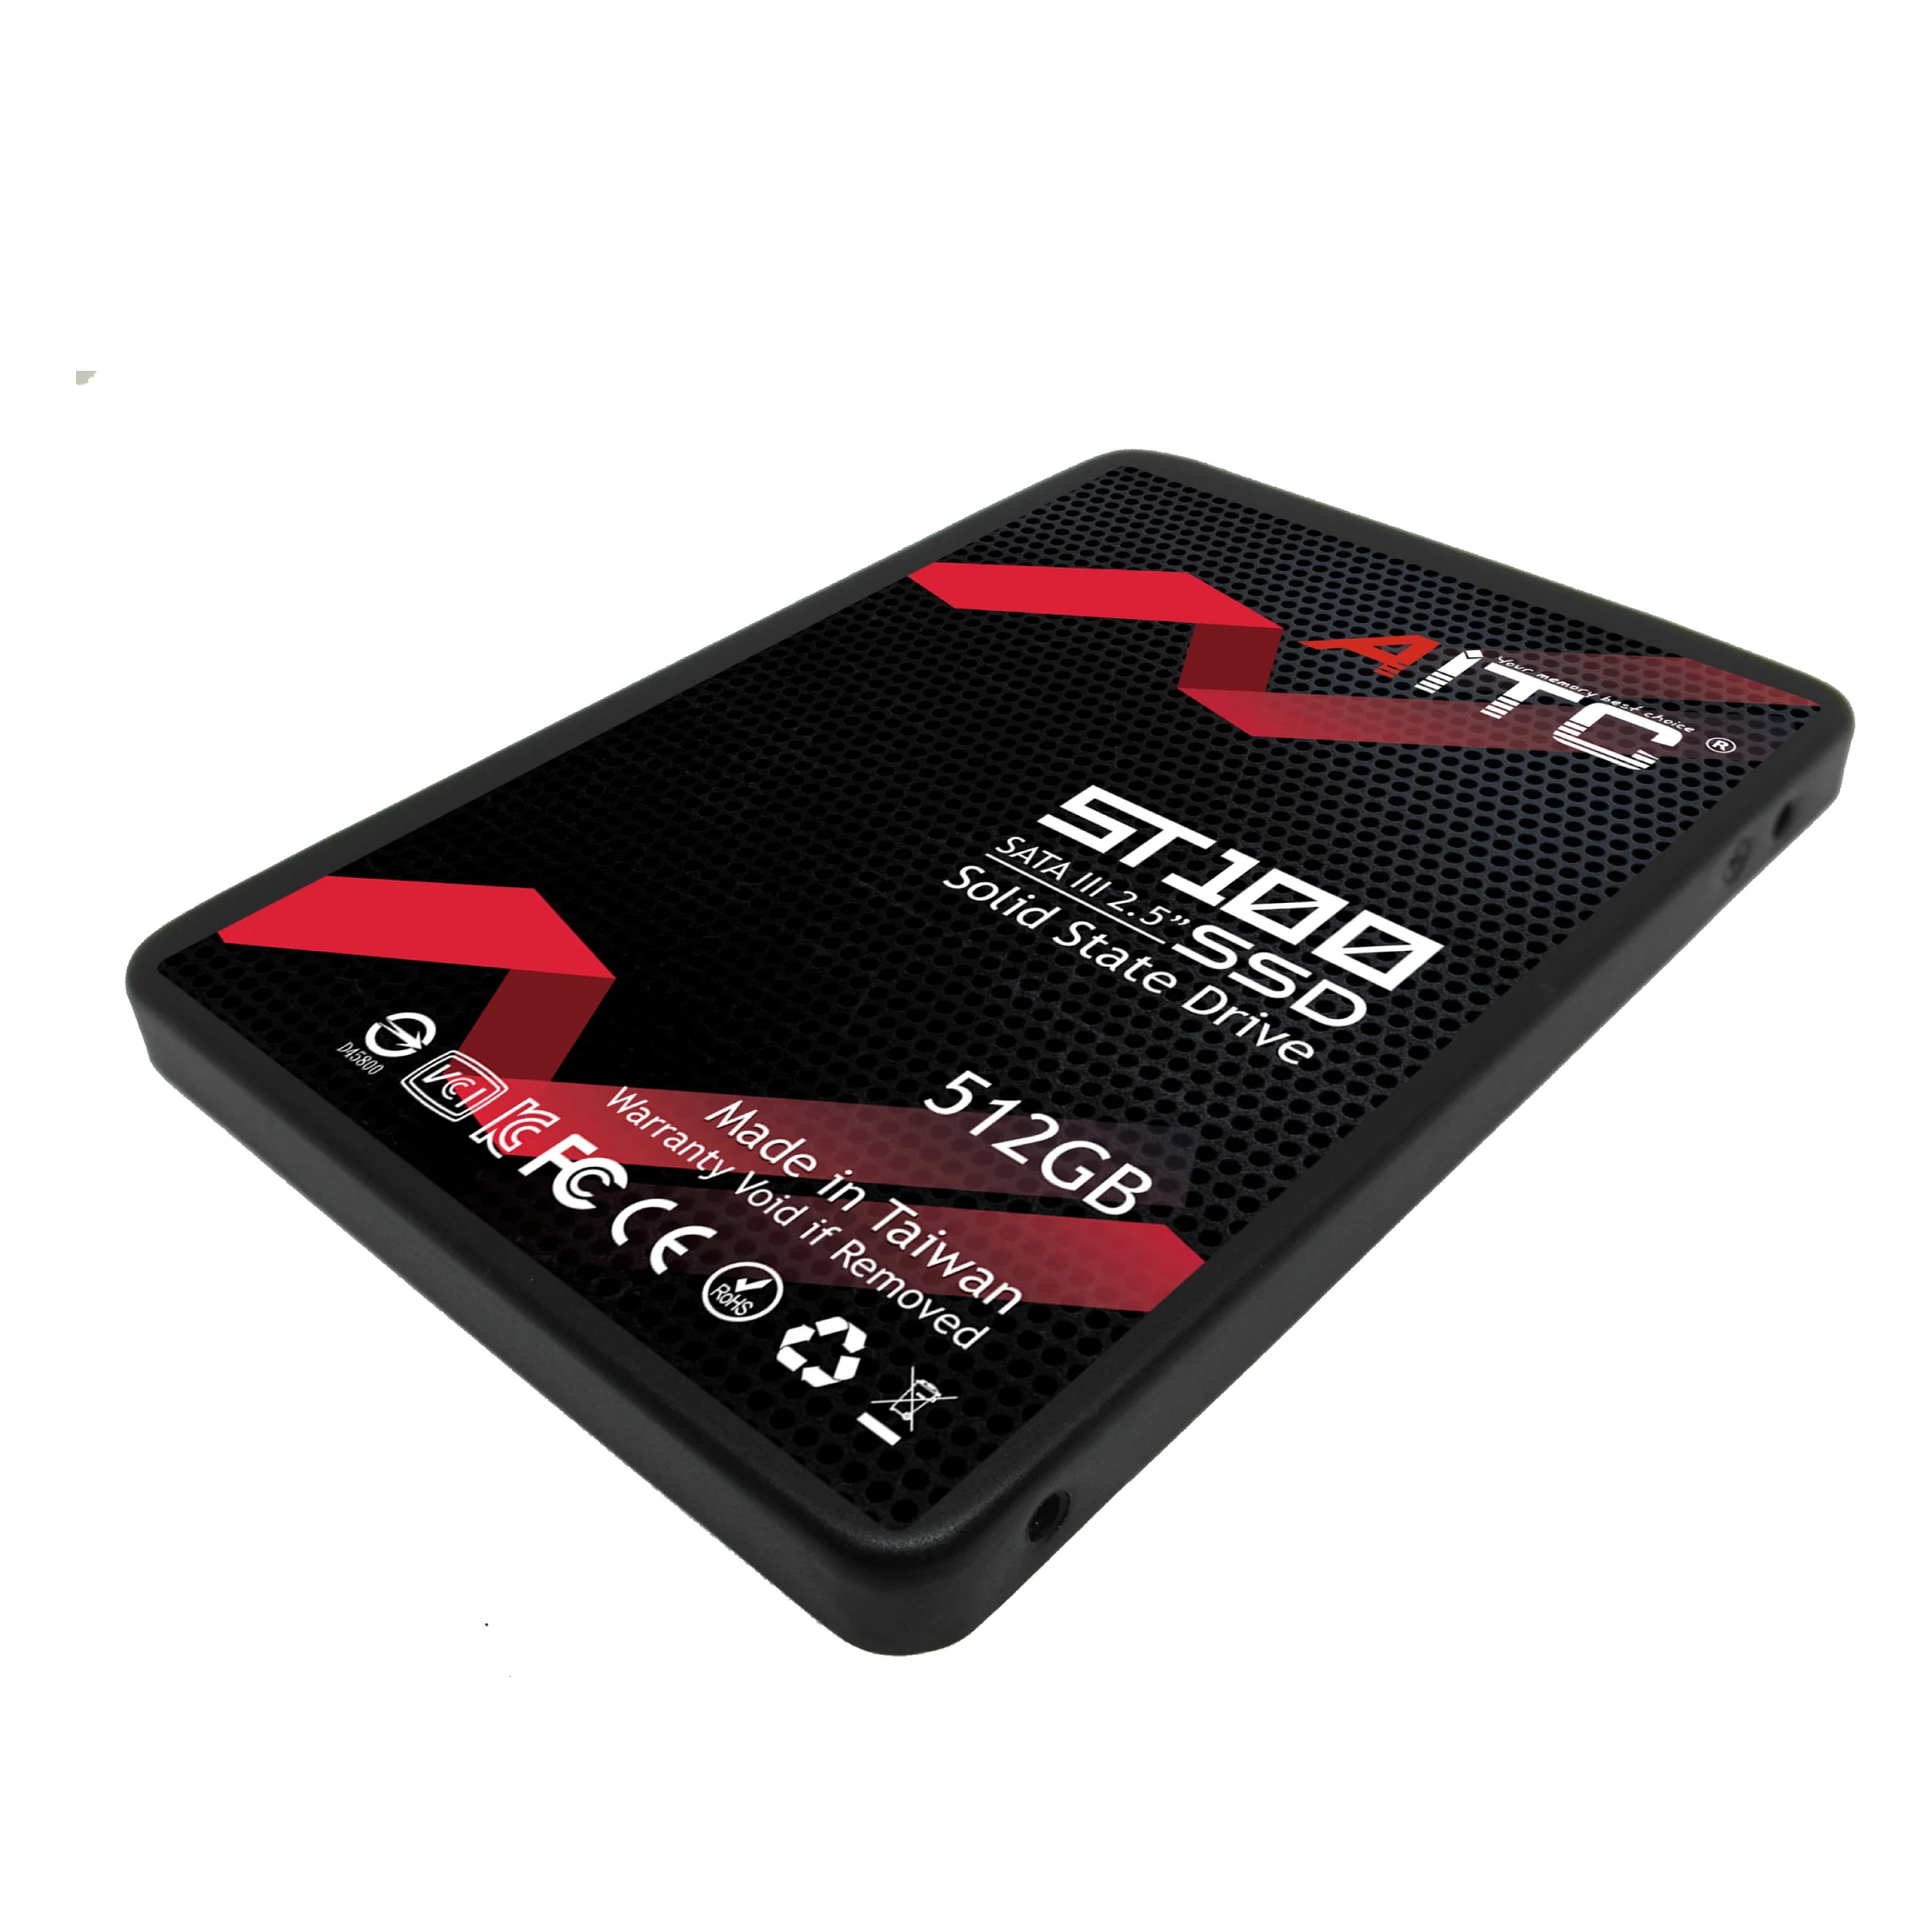 Ssd price. SSD 120. SSD 120gb. SSD 120 GB цена. Ссд 120 ГБ цена.